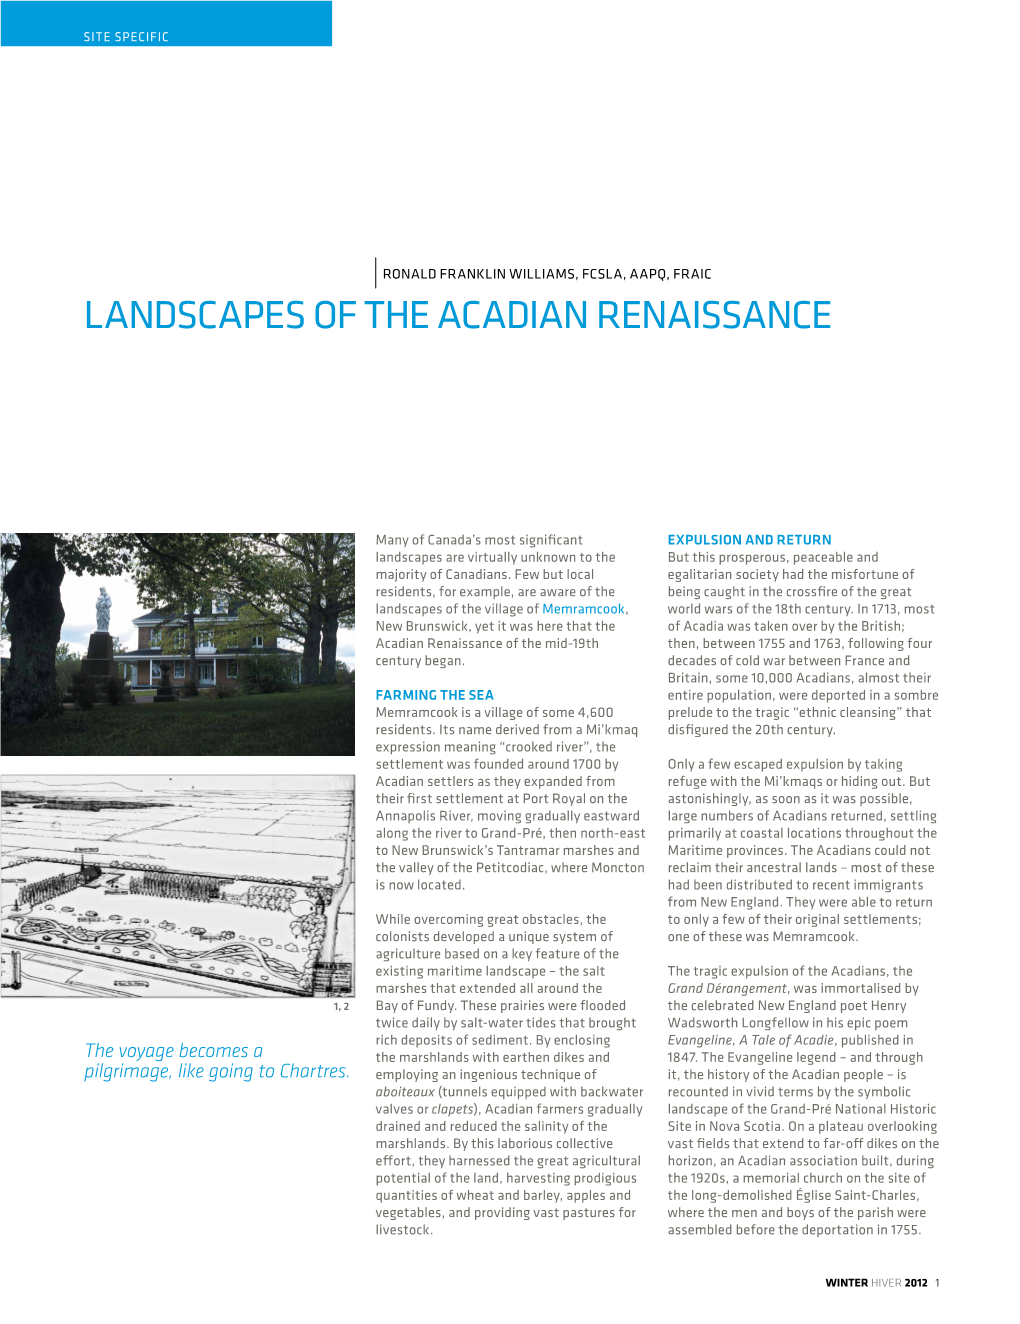 Landscapes of the Acadian Renaissance